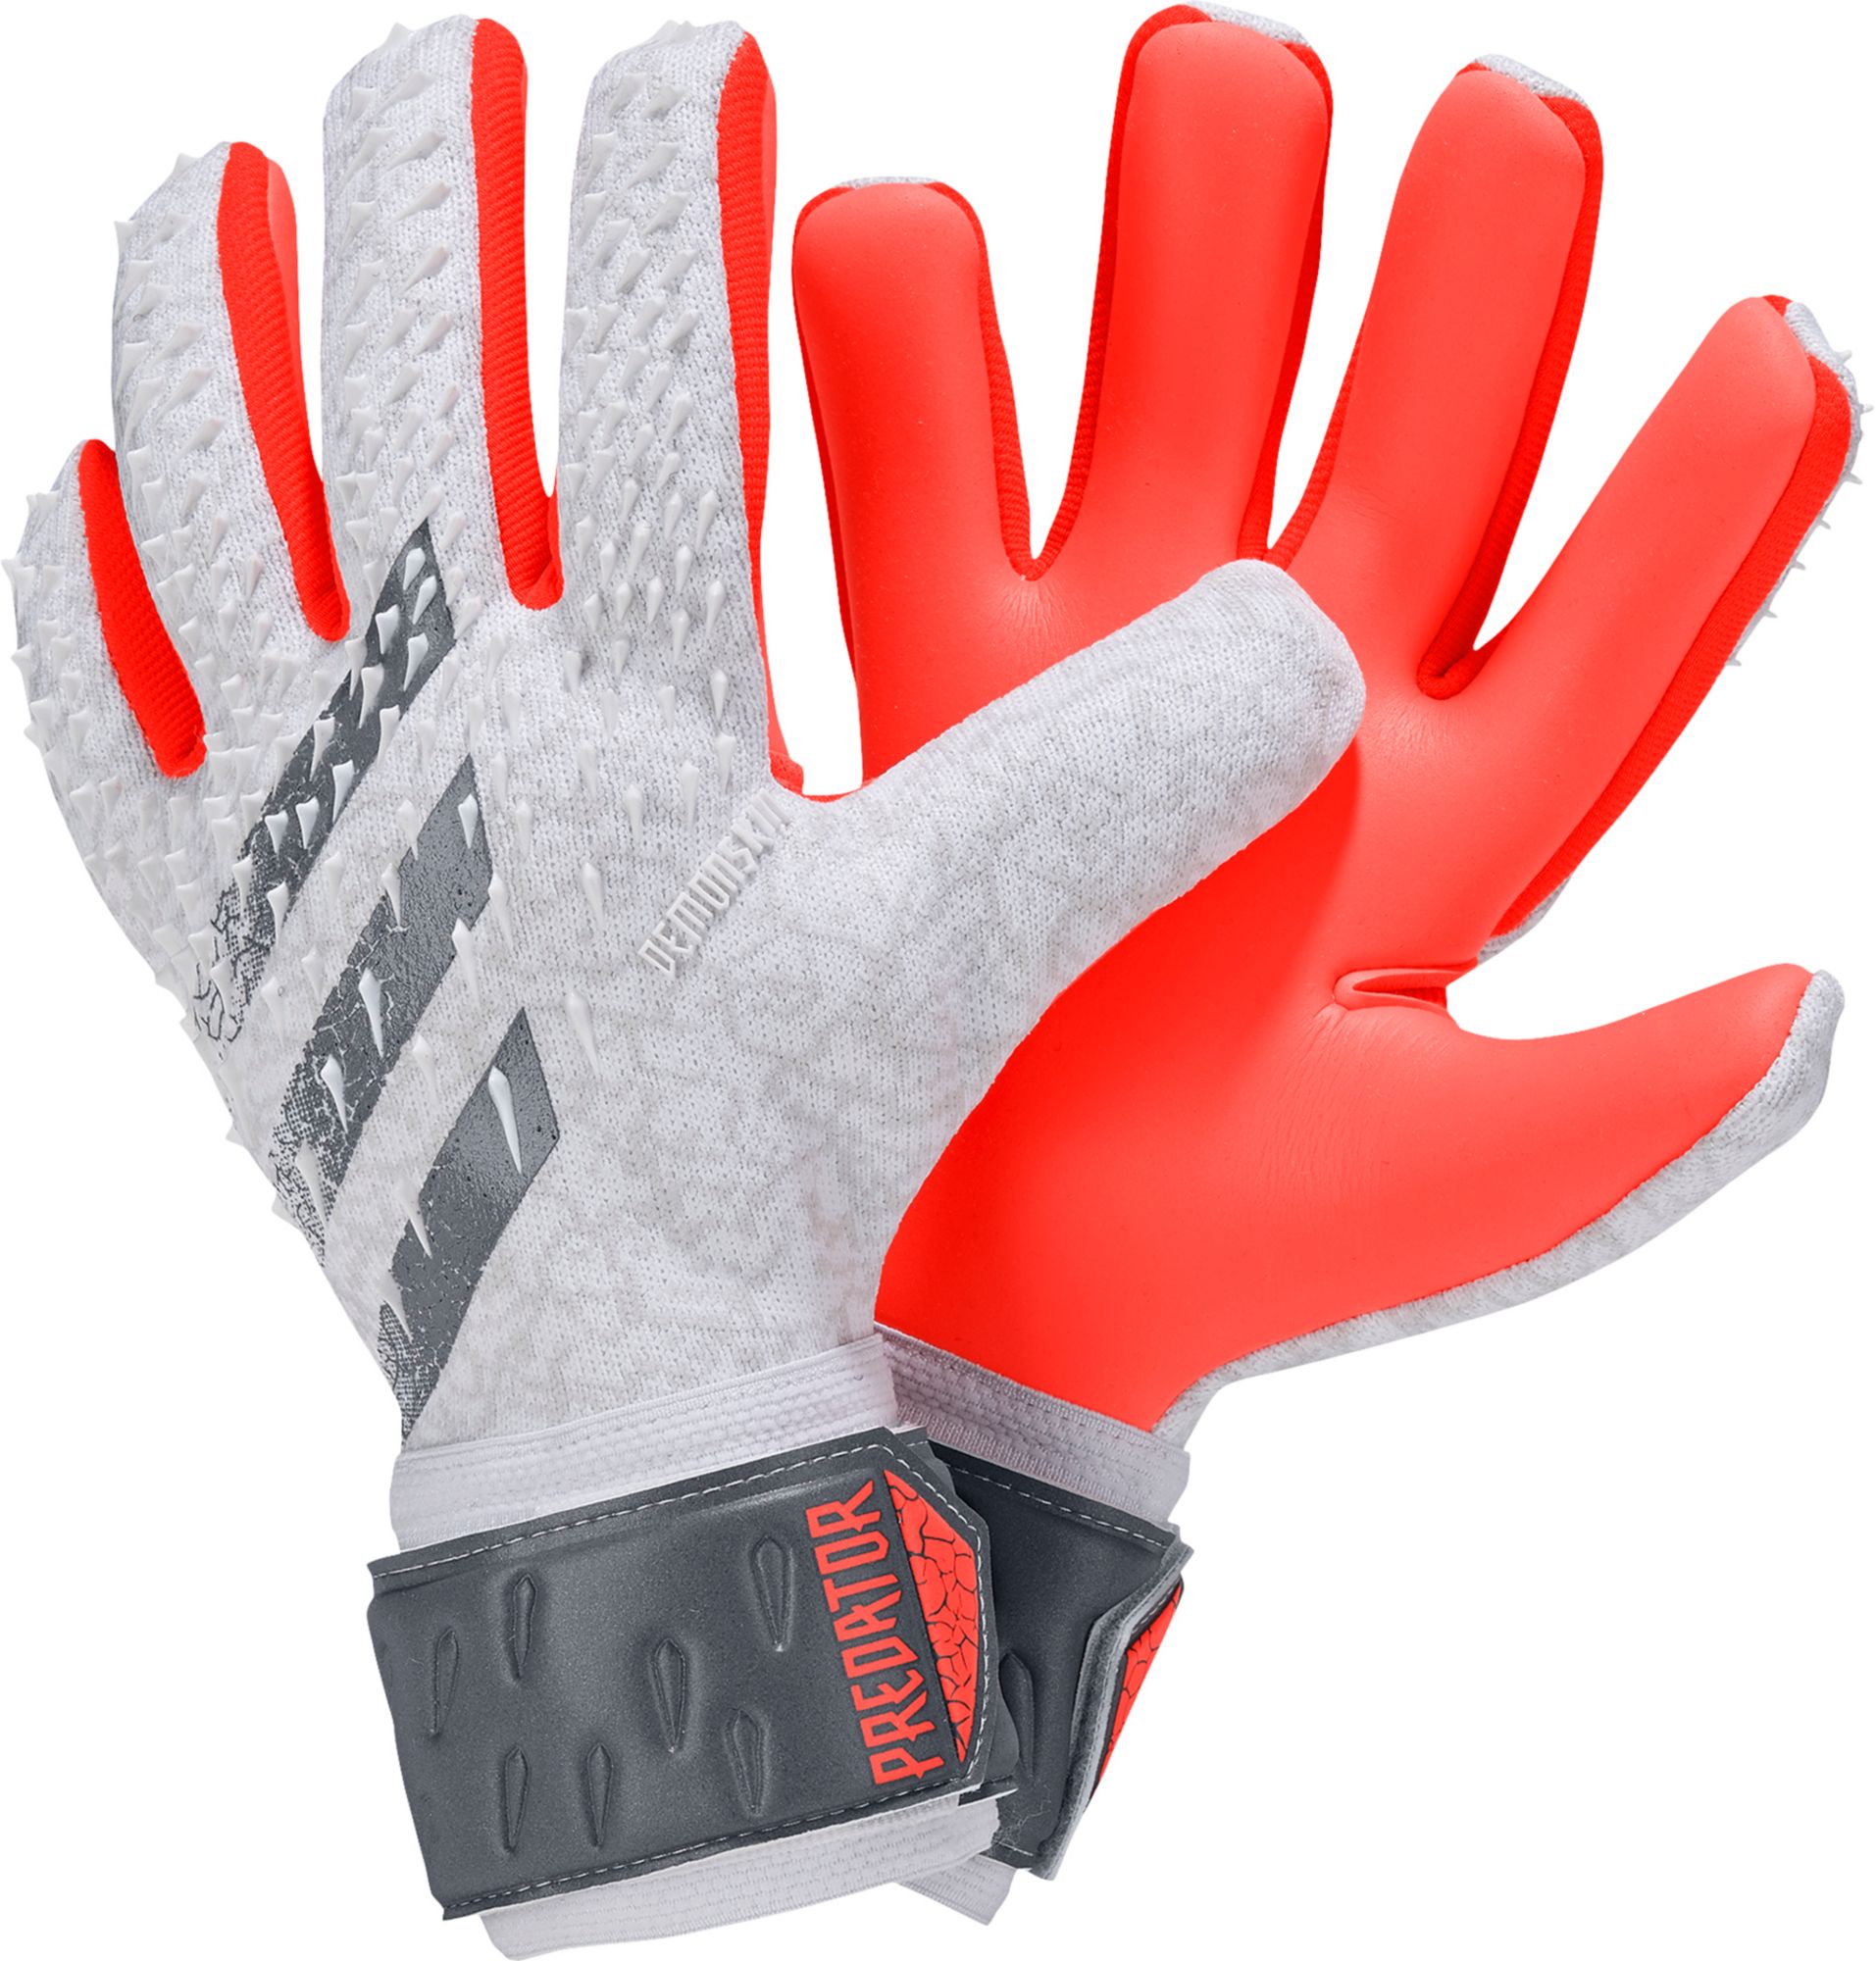 Evgeni Malkin Pro Stock Gloves